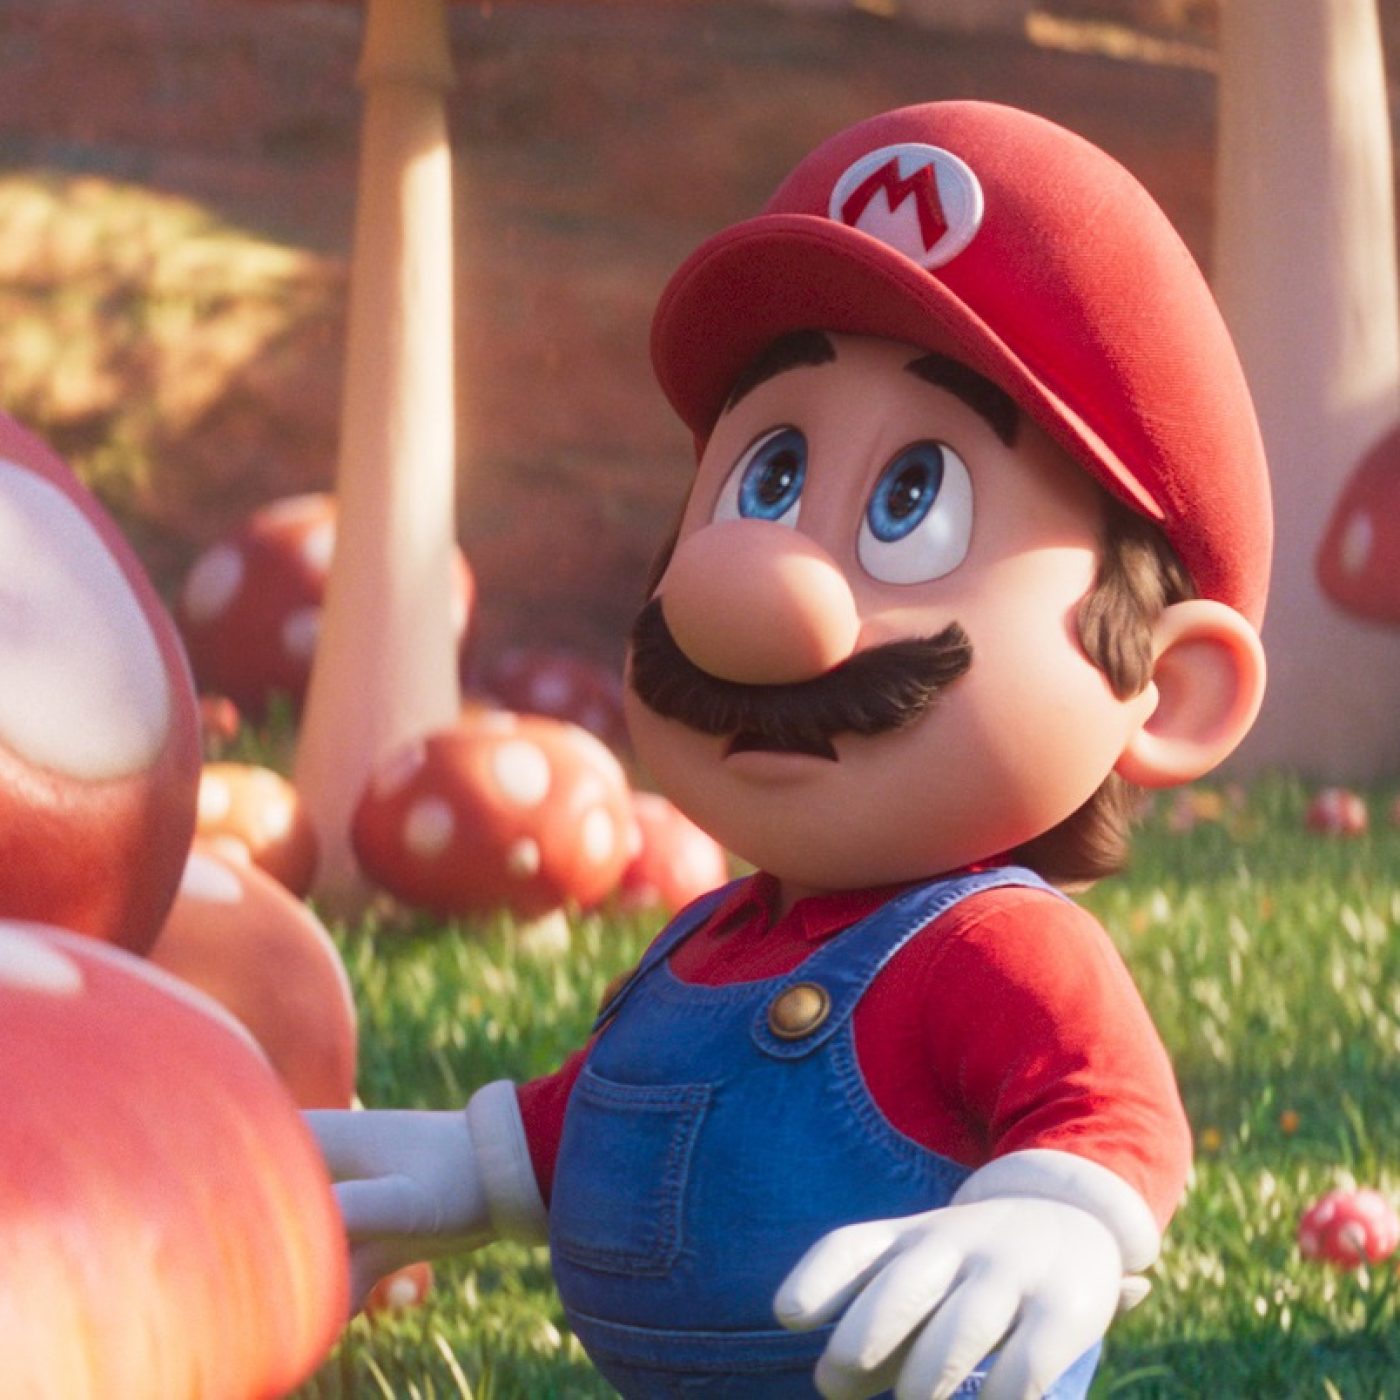 Super Mario Bros. Movie Trailer Has Mario Kart Easter Egg